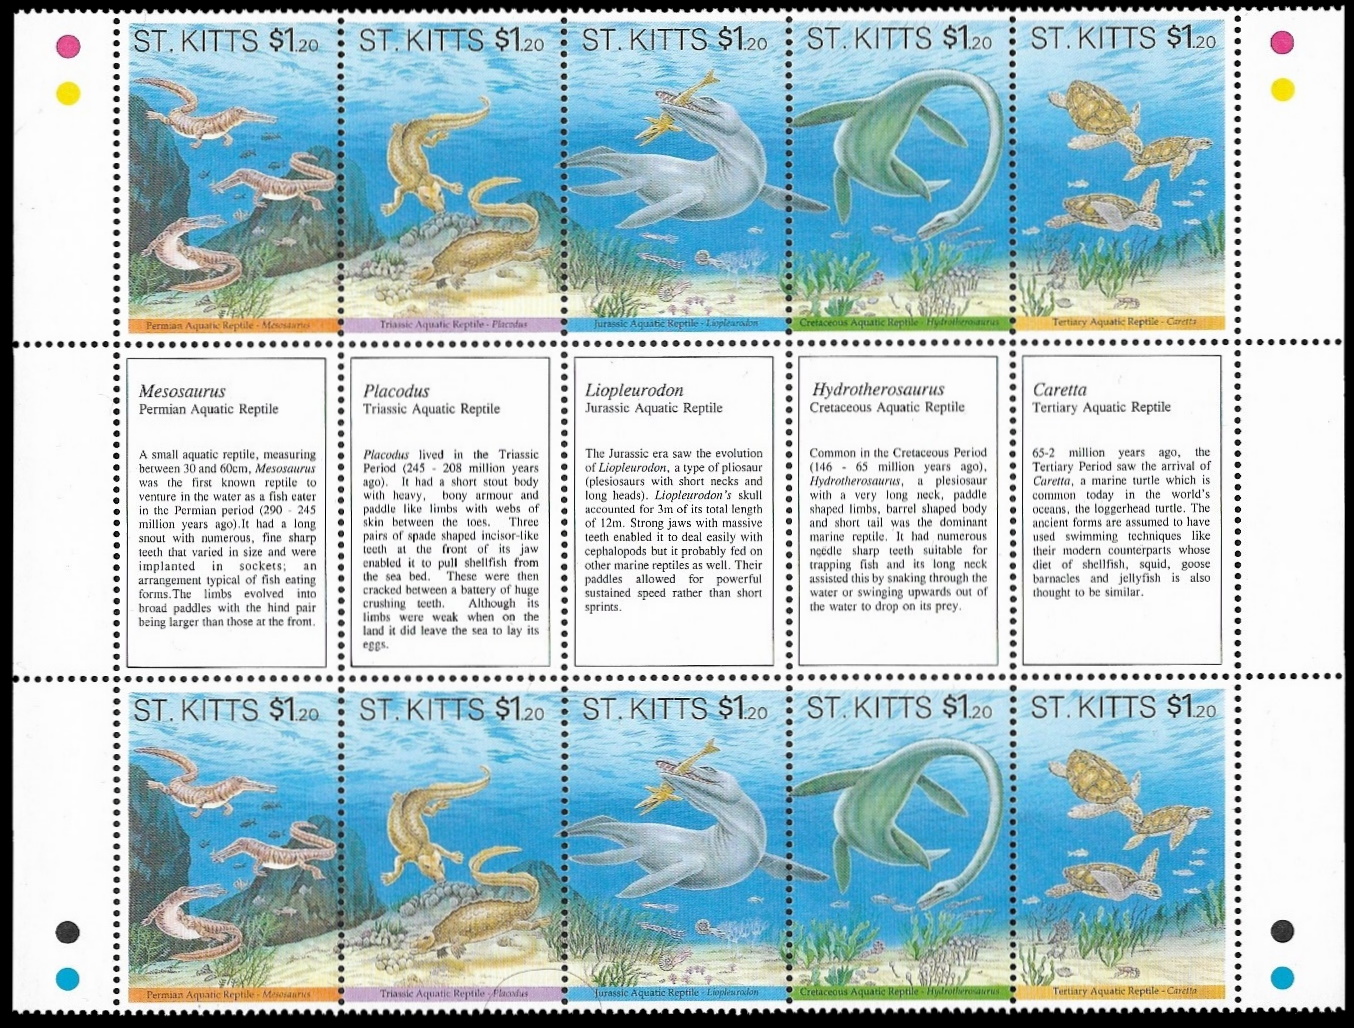  - paleontology stamps of Saint Kitts